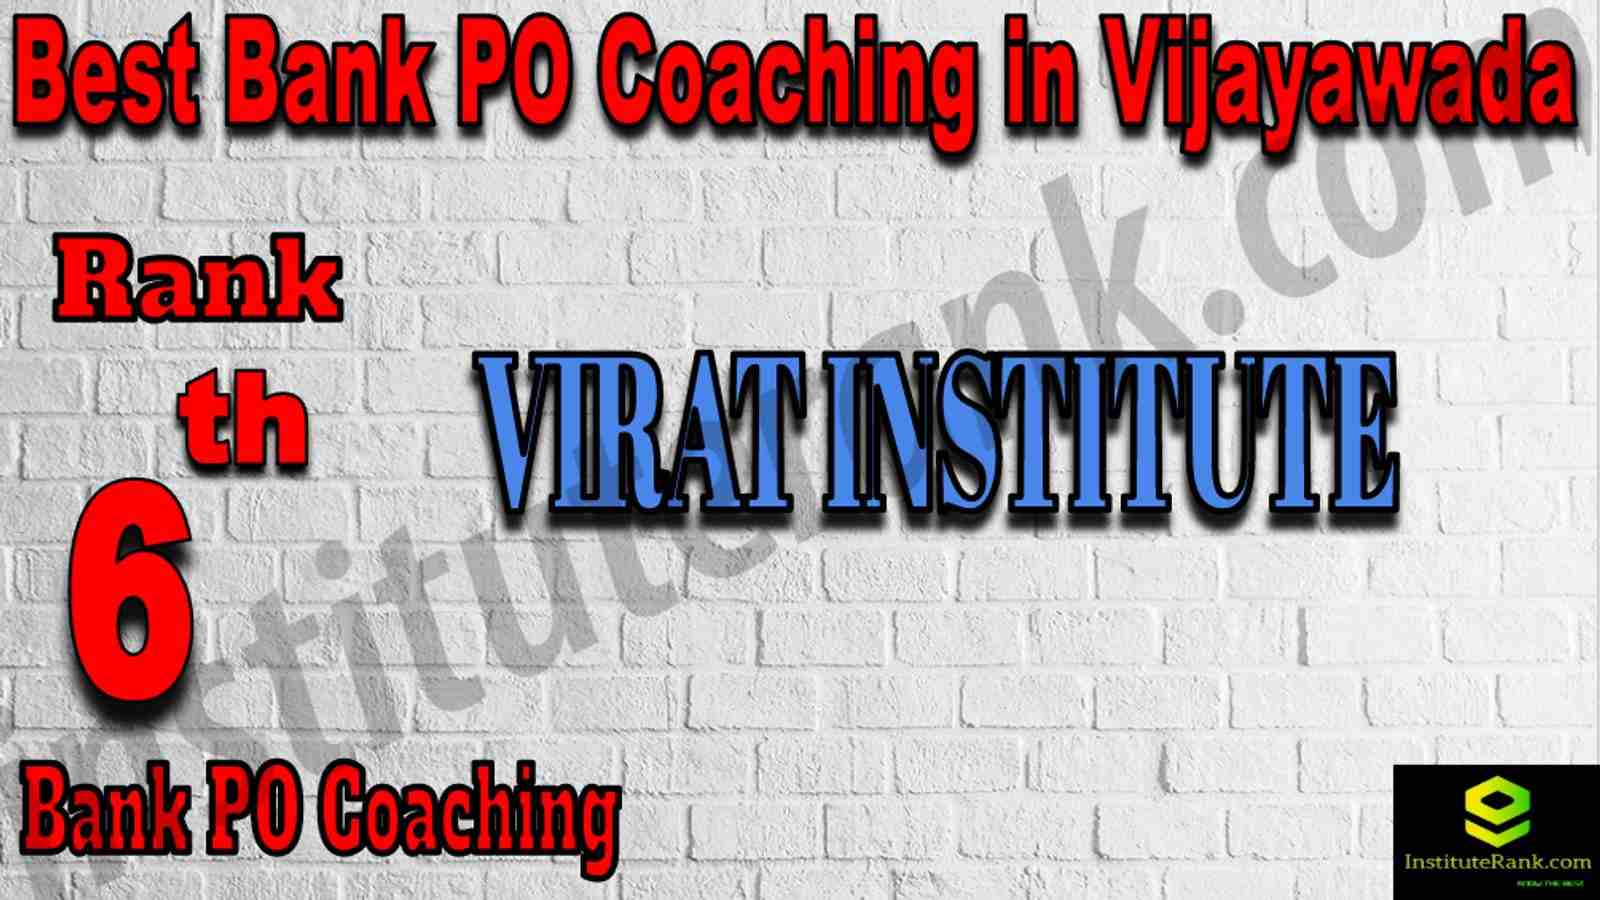 6th Best Bank PO Coaching in Vijayawada